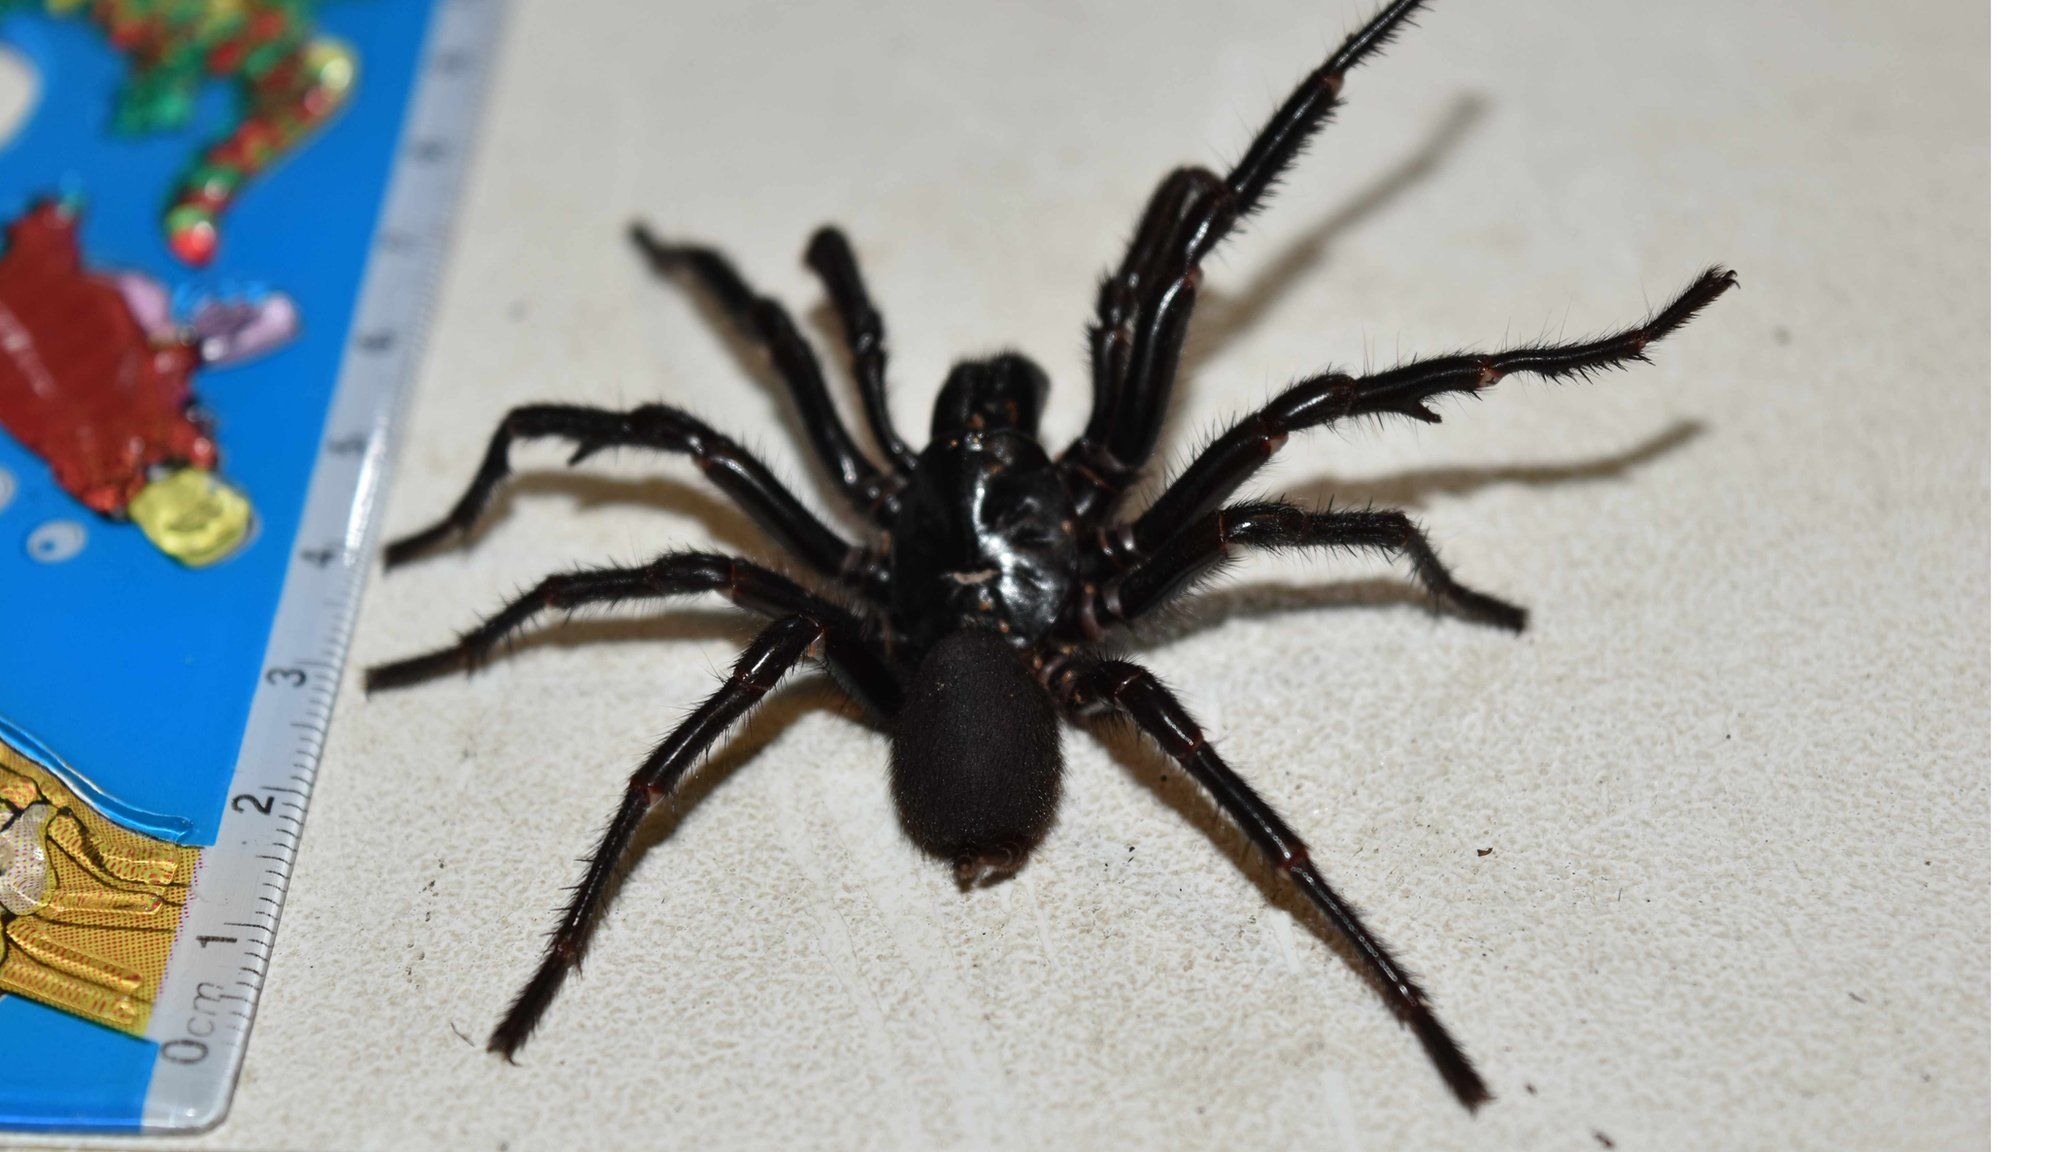 A picture of Big Boy, a 10cm funnel web found in Australia